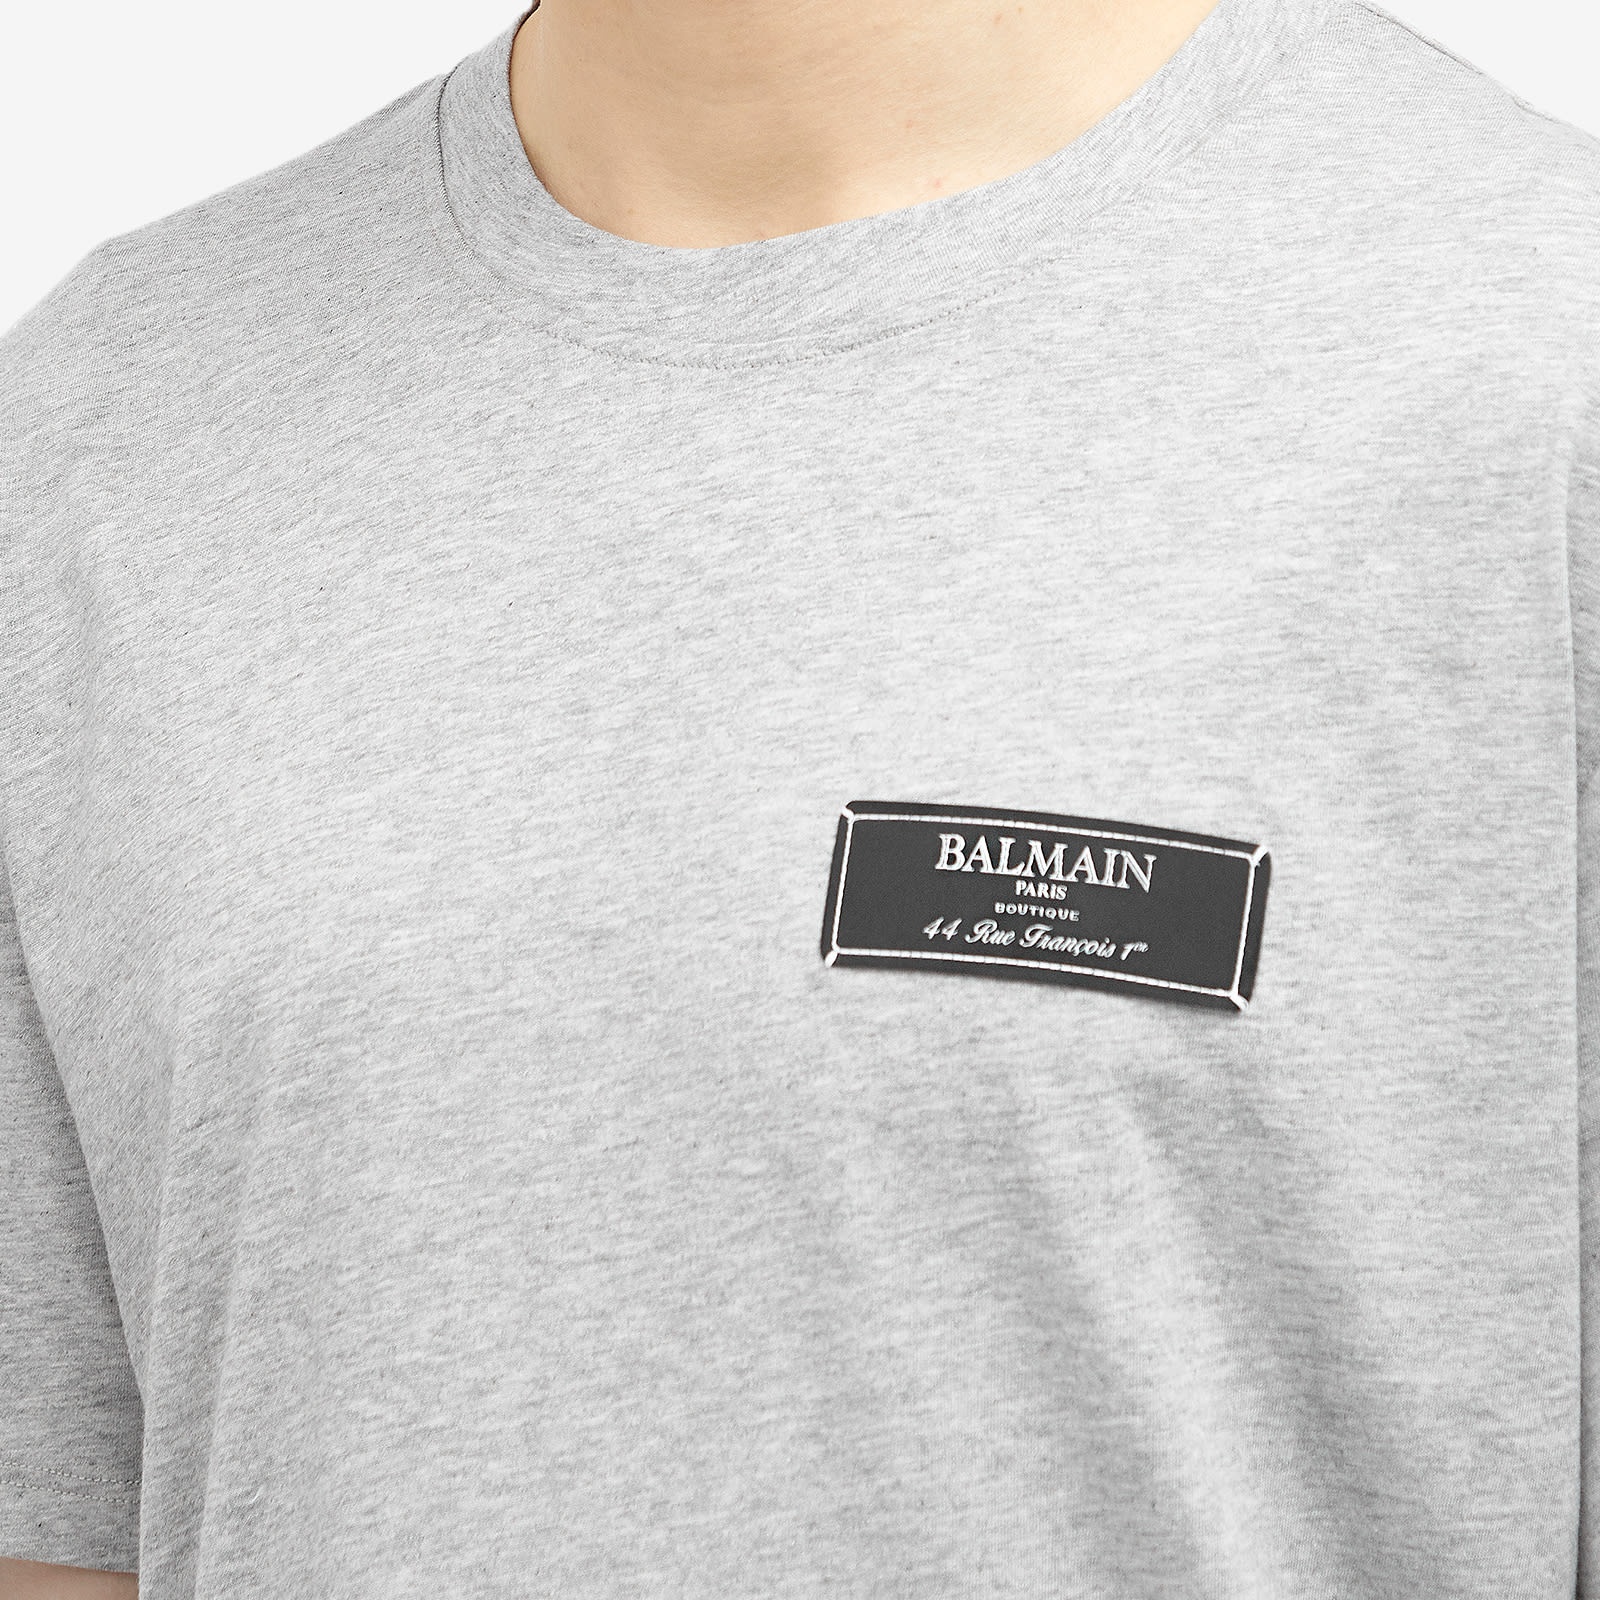 Balmain Label T-Shirt - 5